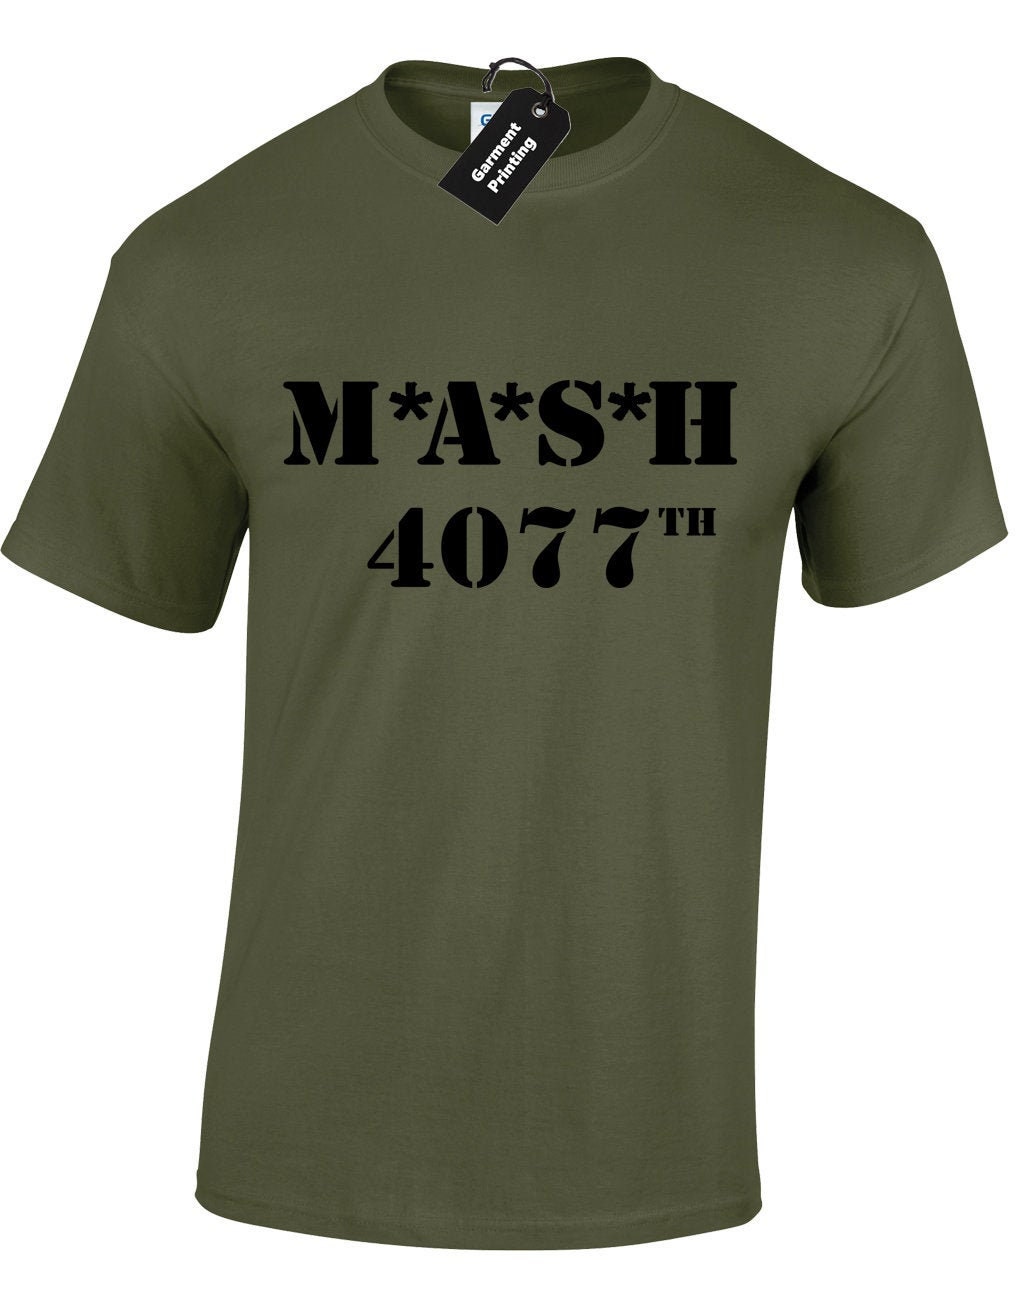 Mash Mens T Shirt Unisex 4077TH Marines Retro Funny TV - Etsy UK